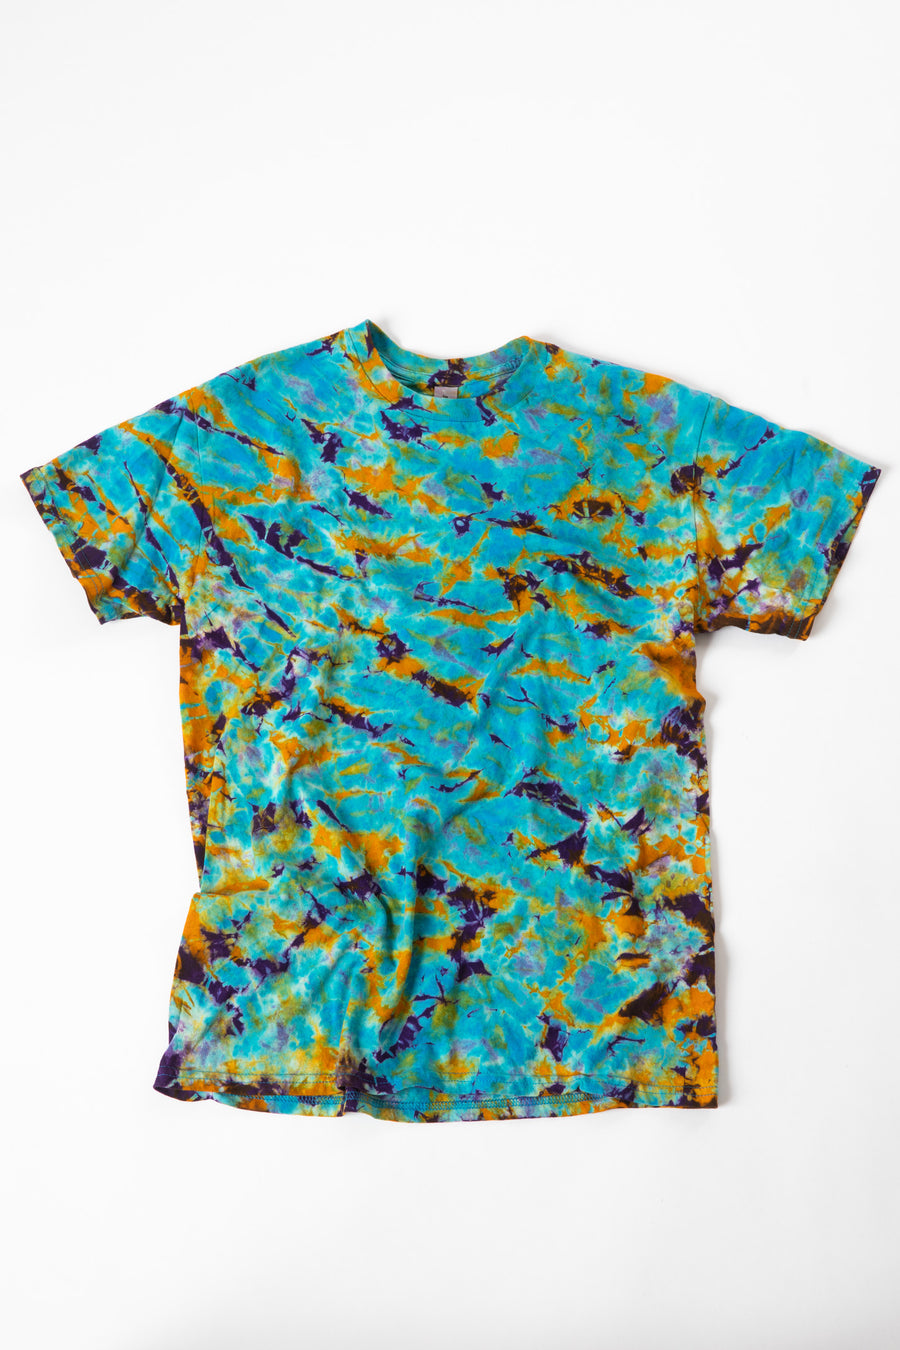 Crackle Dye Tie Dye T-Shirt